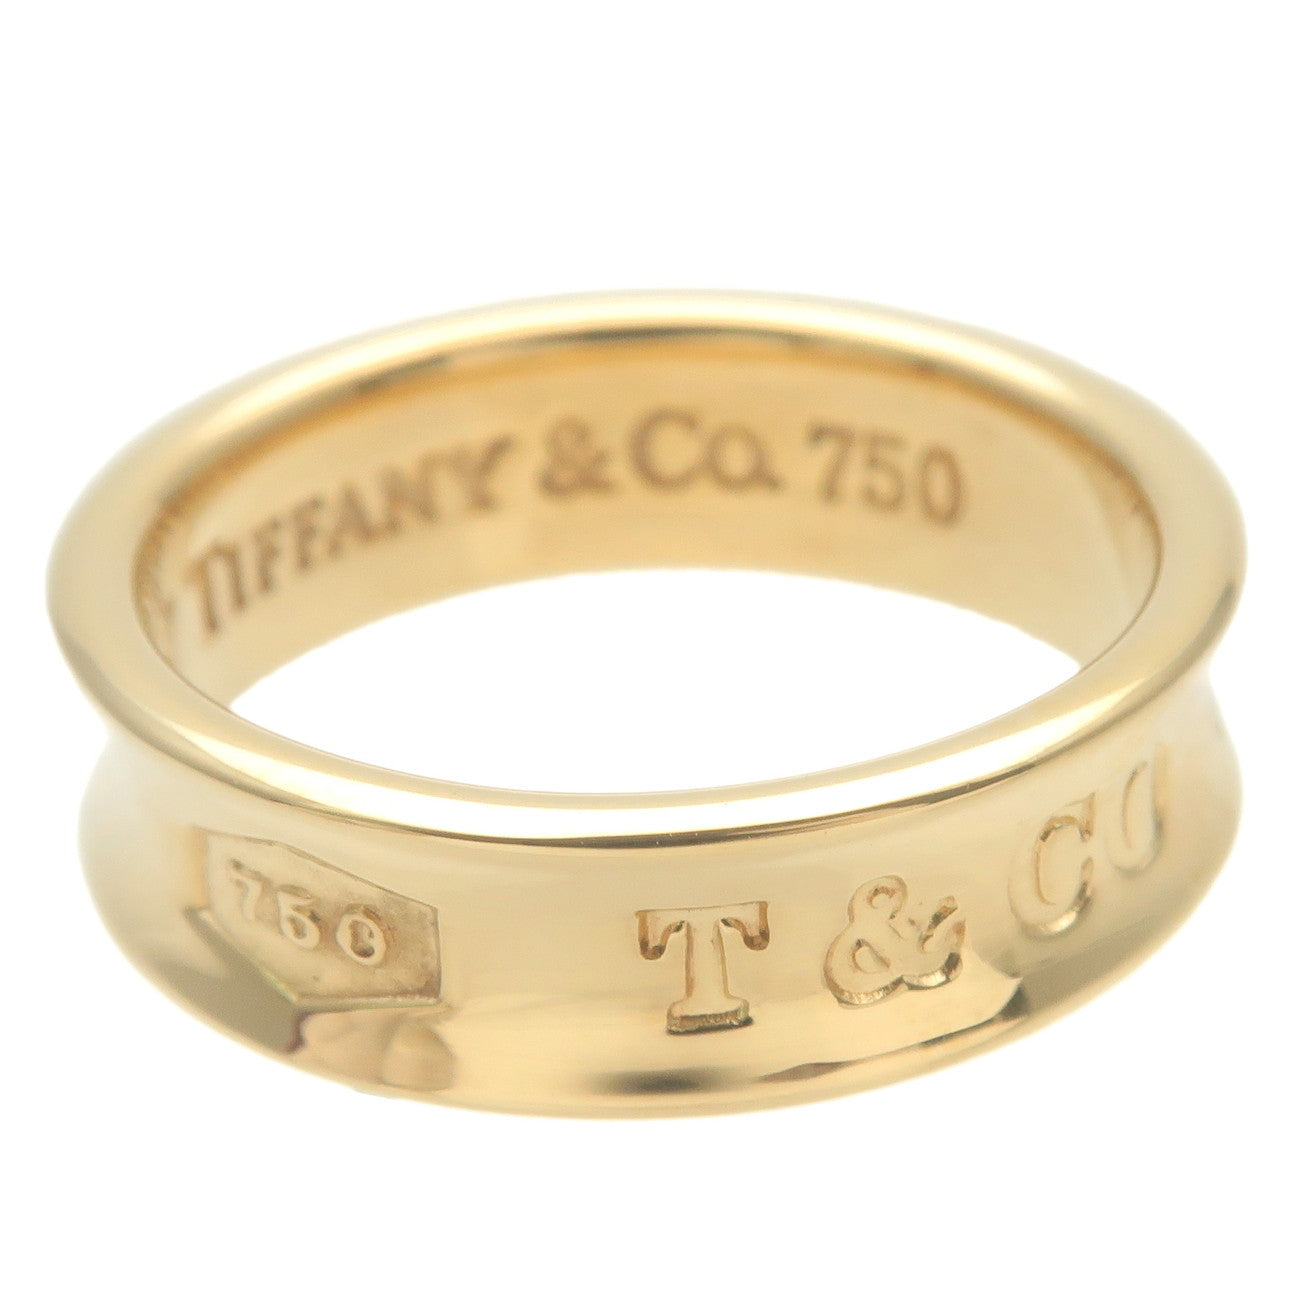 Tiffany&Co. 1837 Narrow Ring K18YG 750 Yellow Gold US7-7.5